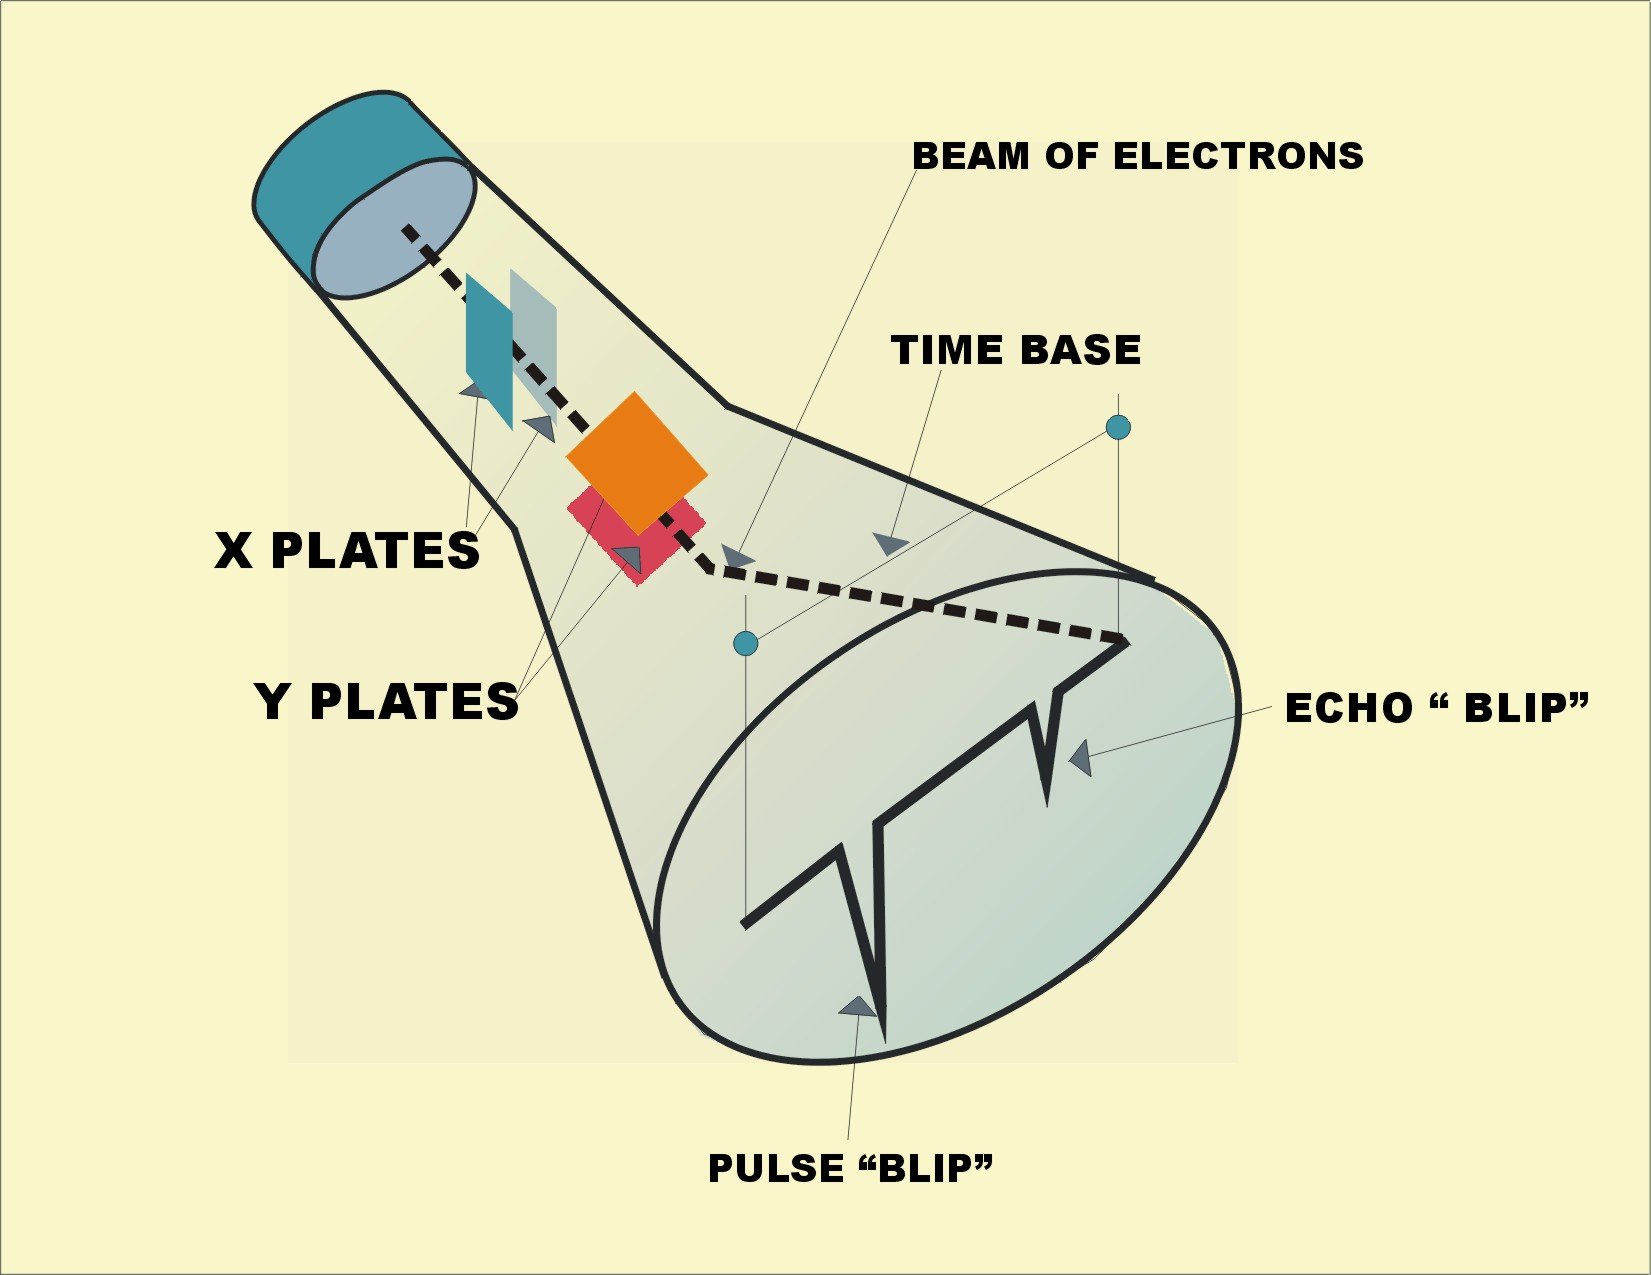 A schematic diagram of an oscilloscope